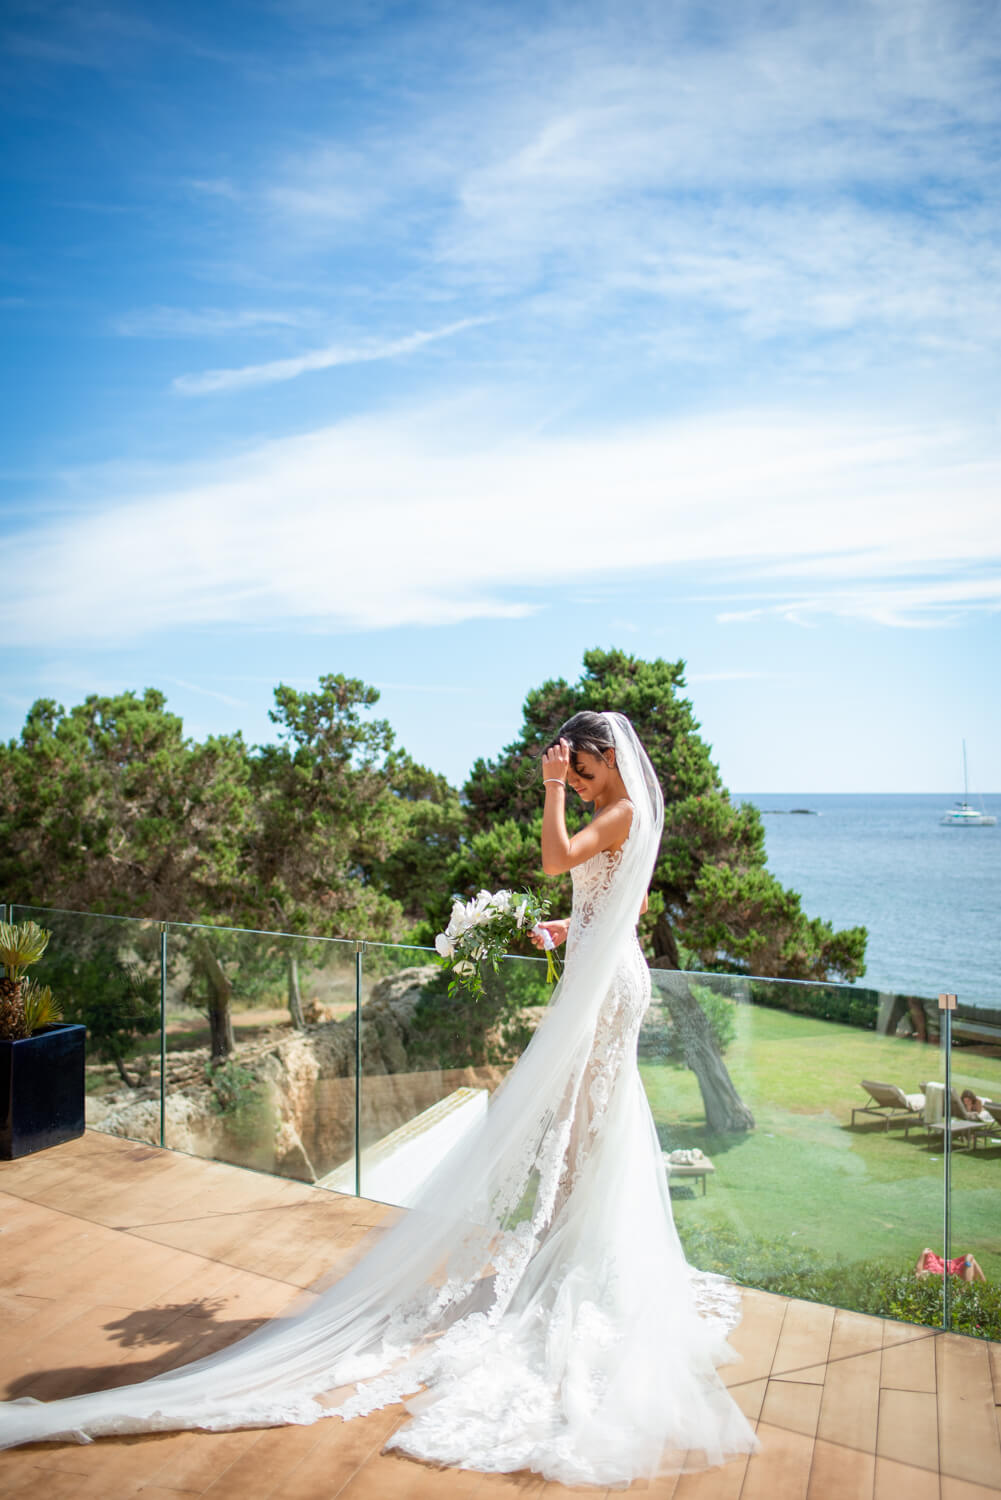 Ibiza Bride Wedding Dress, Nikki beach